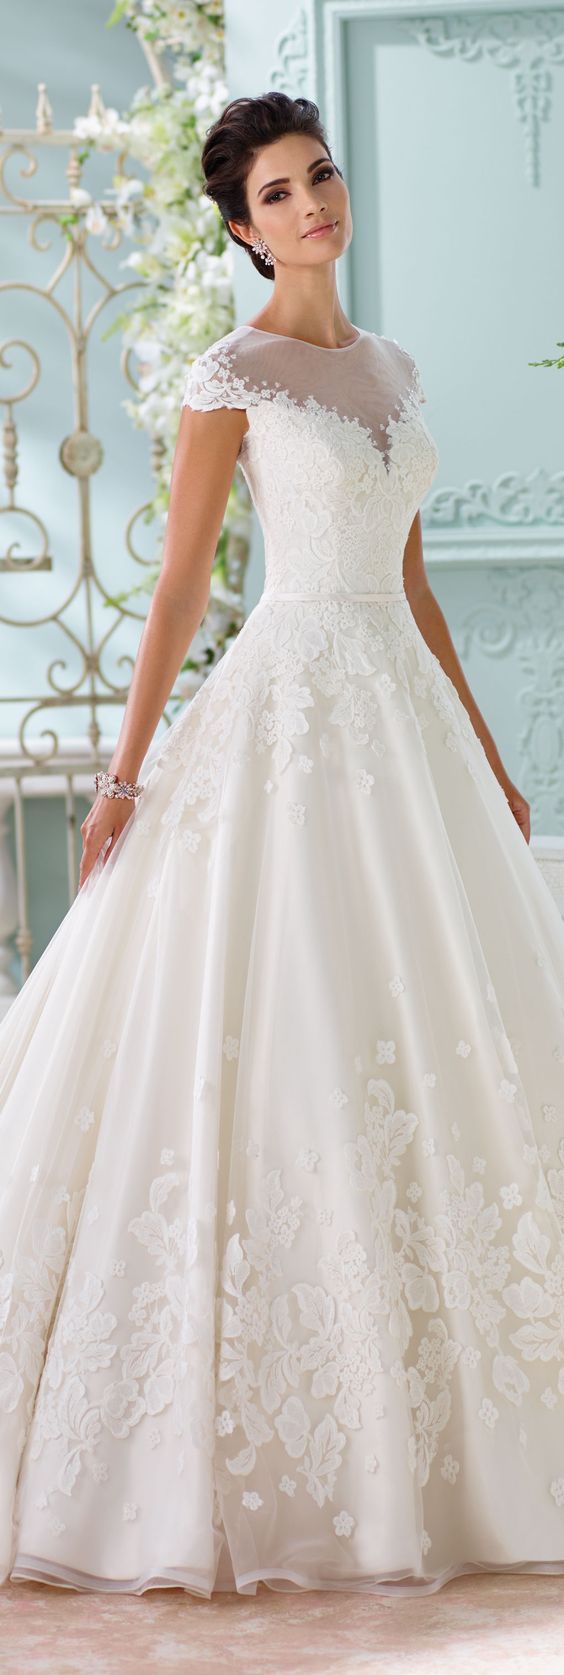 Hochzeit - Bridal Gown With Cap Sleeves